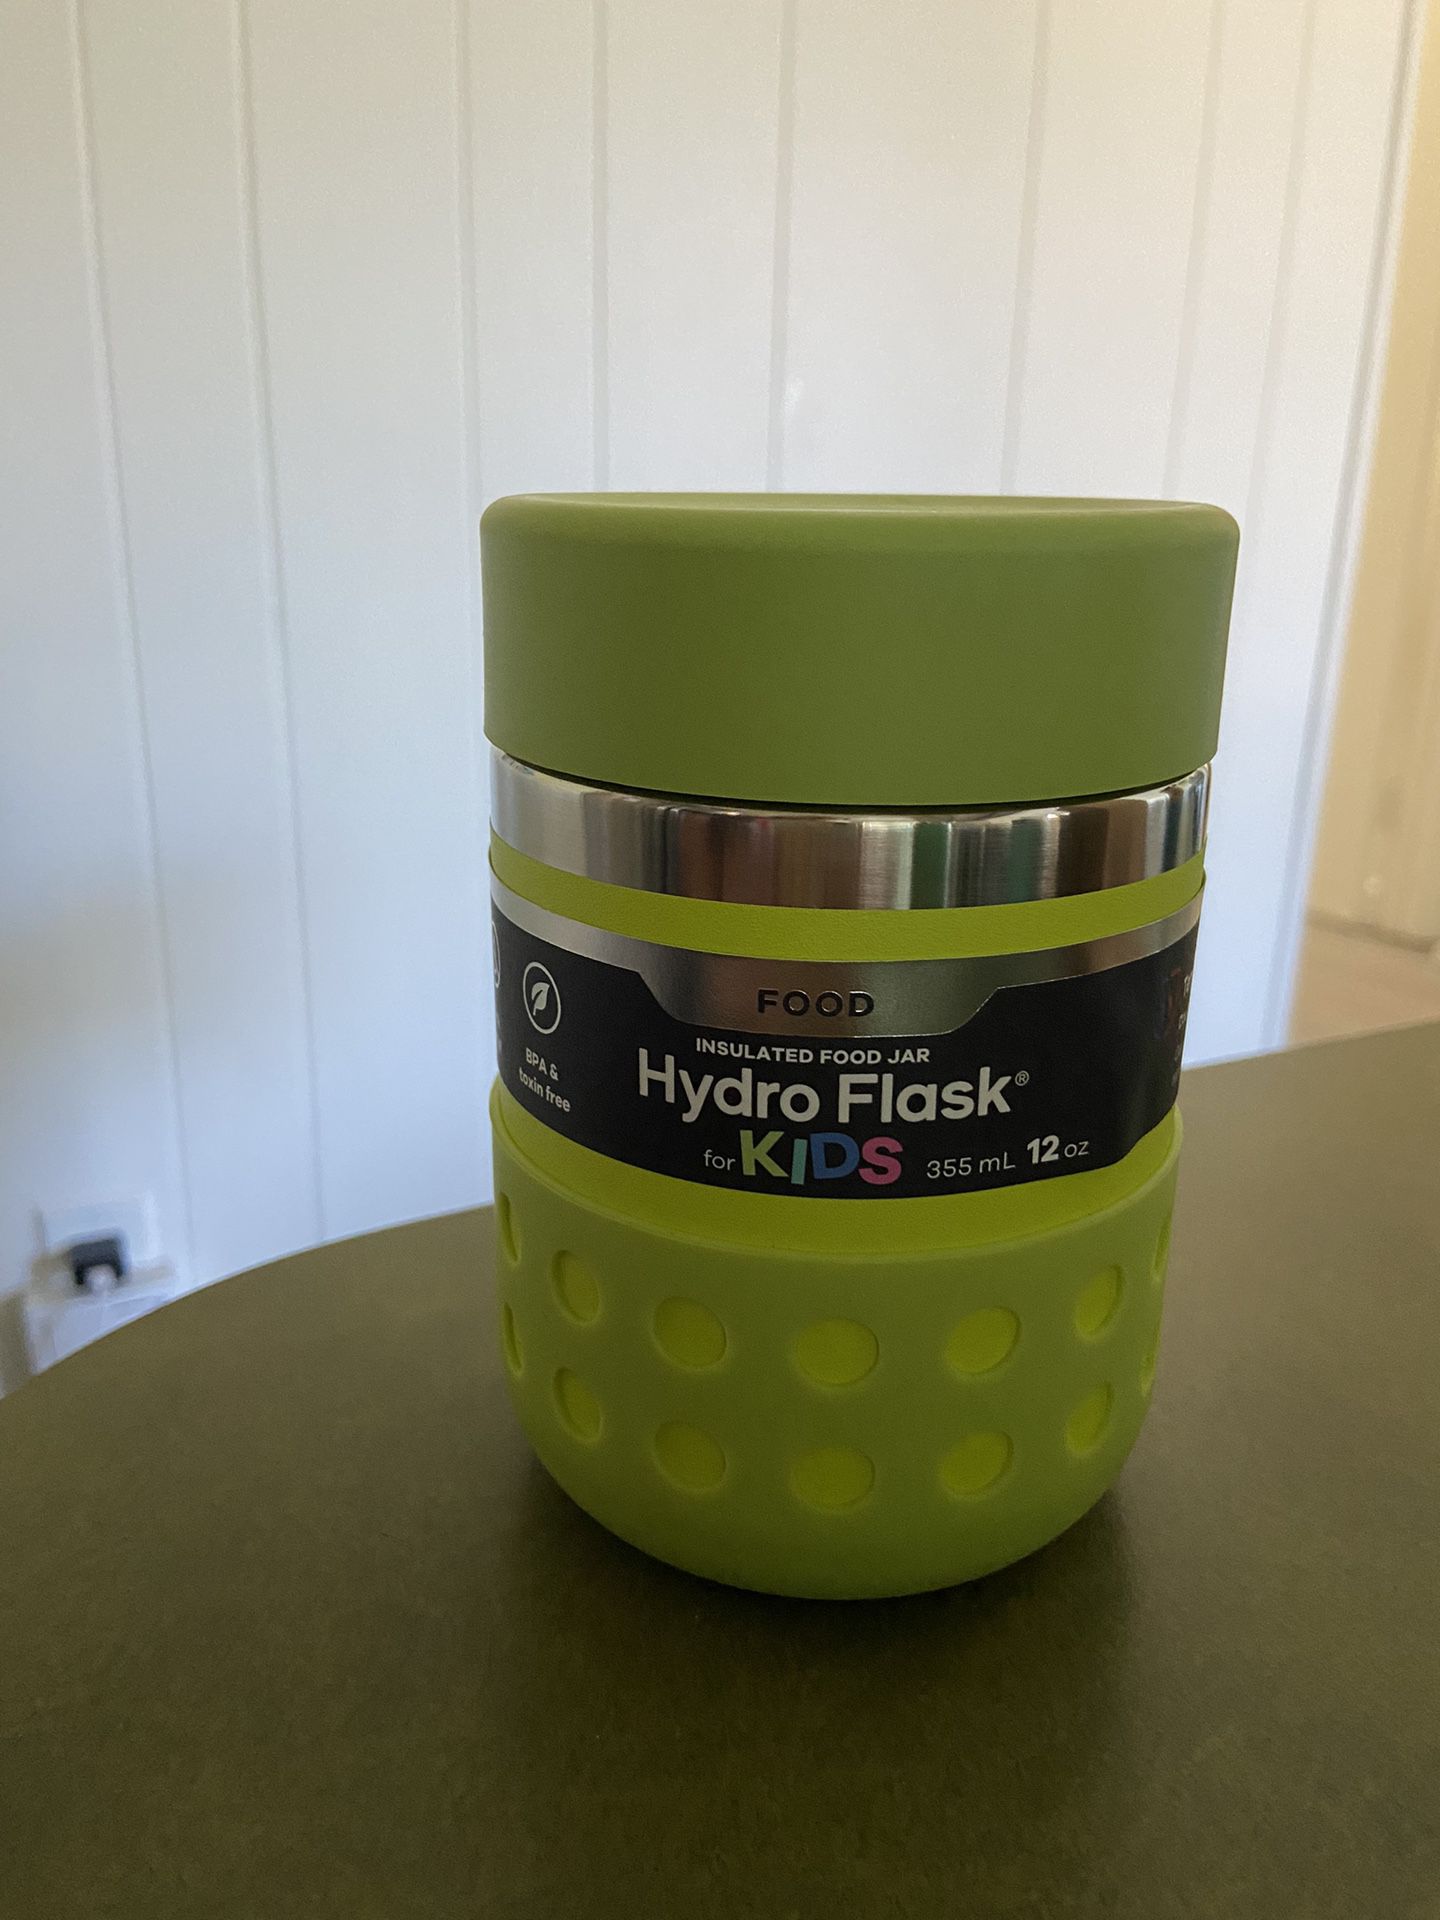 Hydro Flask 12oz Insulated Food Jar & Boot - Kids